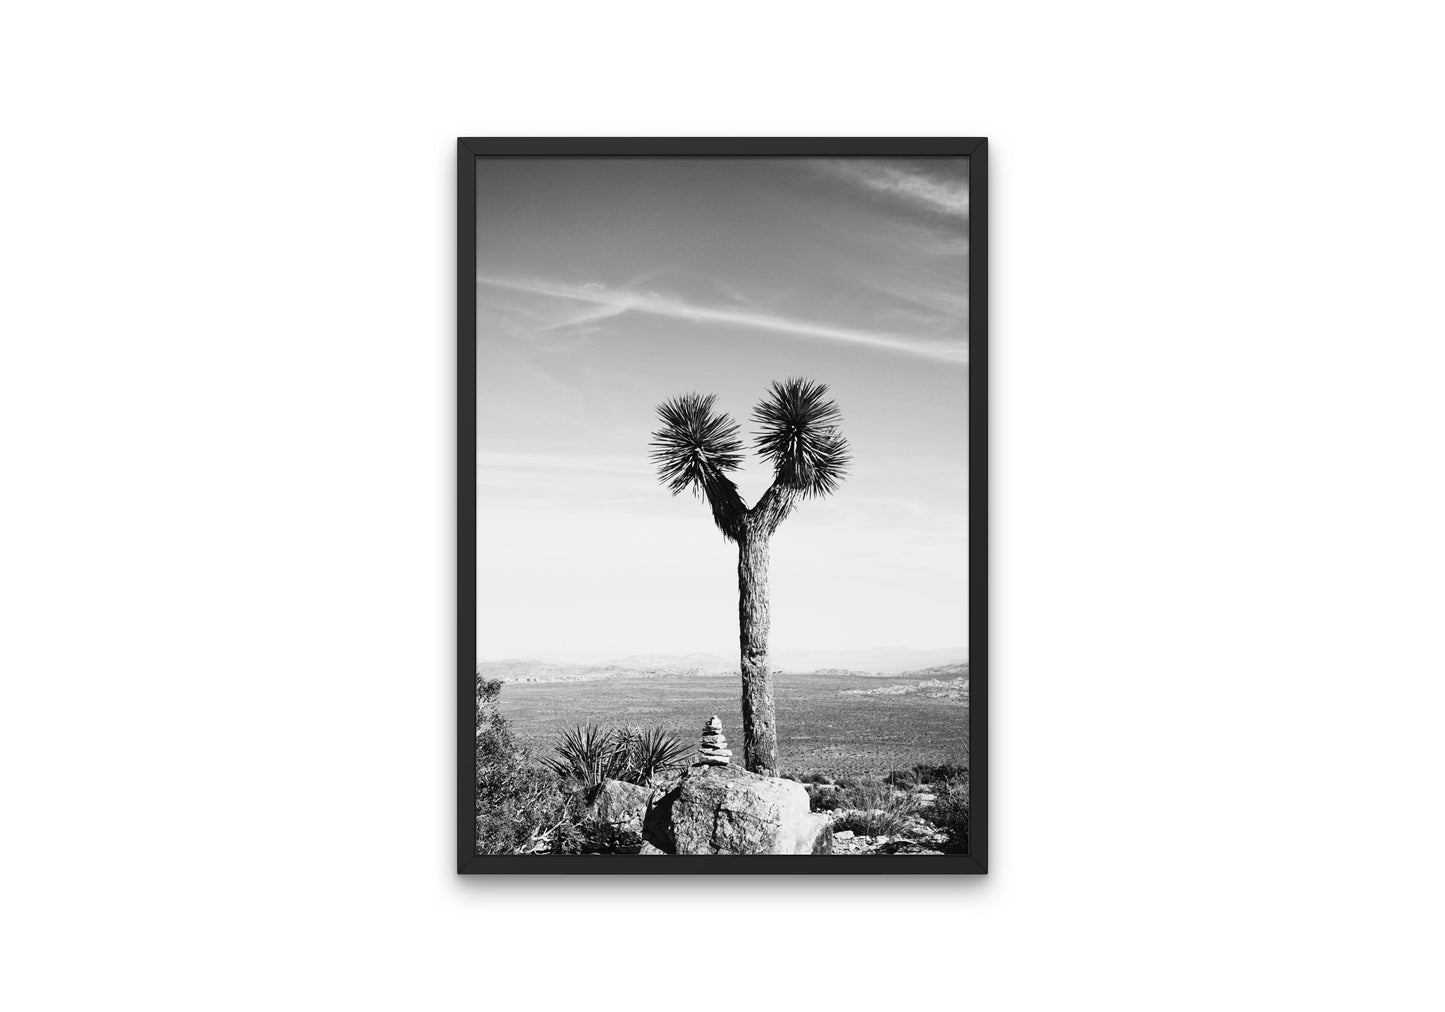 Black and White Joshua Tree Poster INSTANT DOWNLOAD, Black White Desert Art, national park poster, Landscape Prints Wall Art, Rustic Western